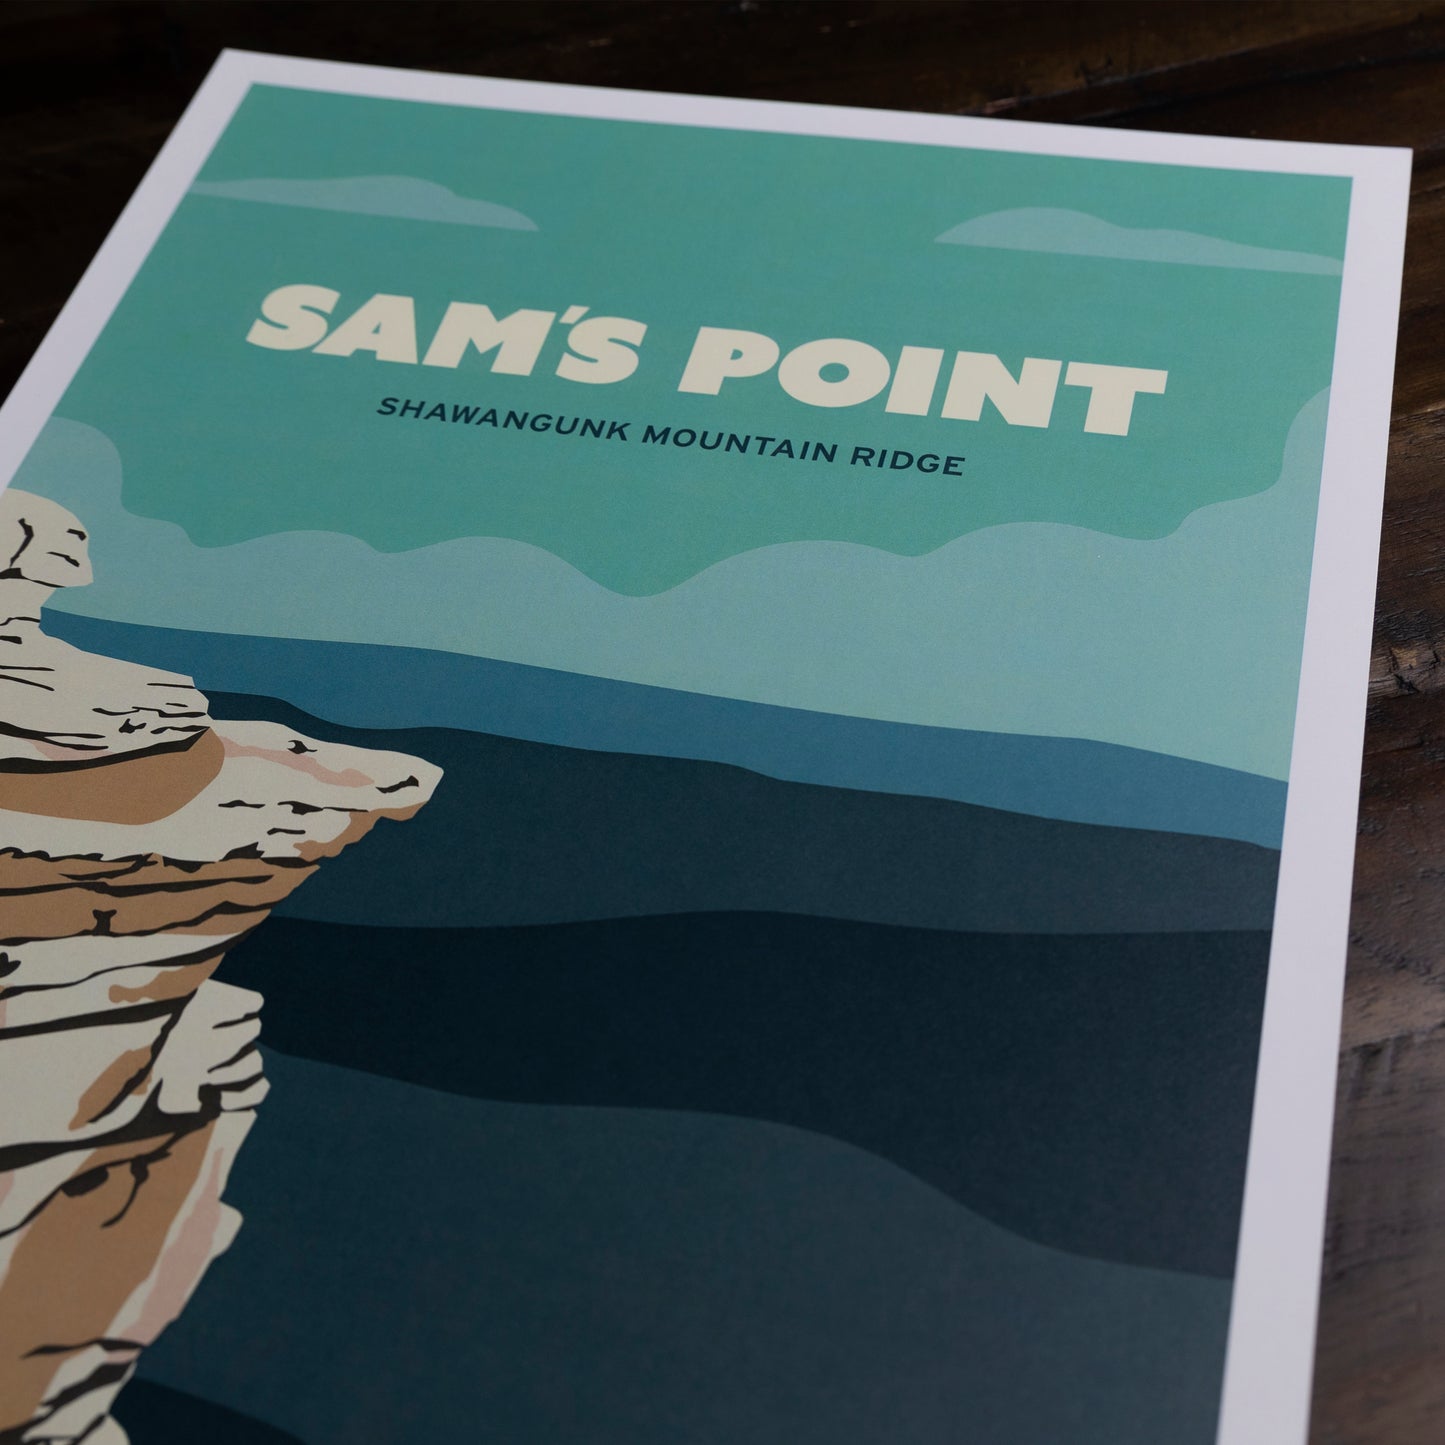 Sam's Point